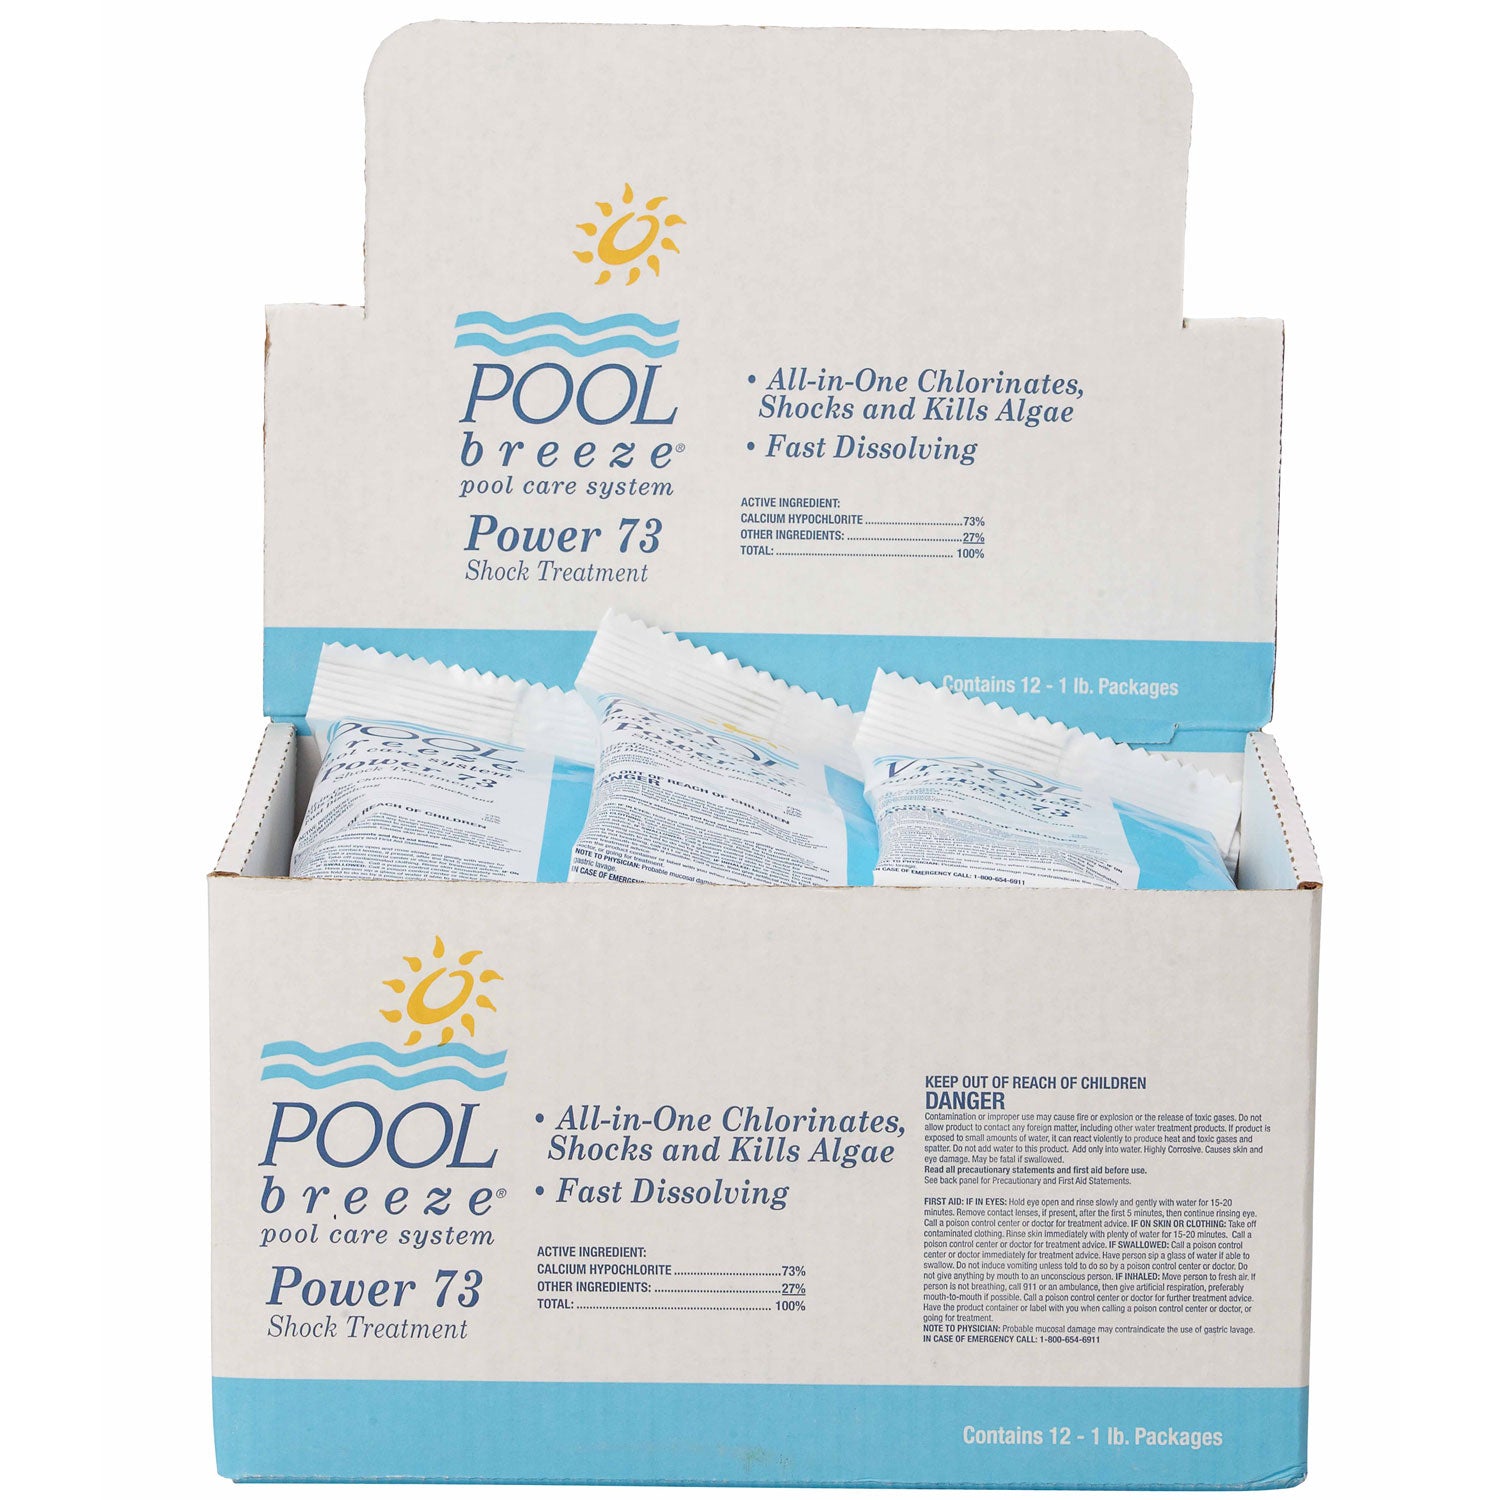 Pool Breeze Power 73 Shock Treatment - 24 Pack